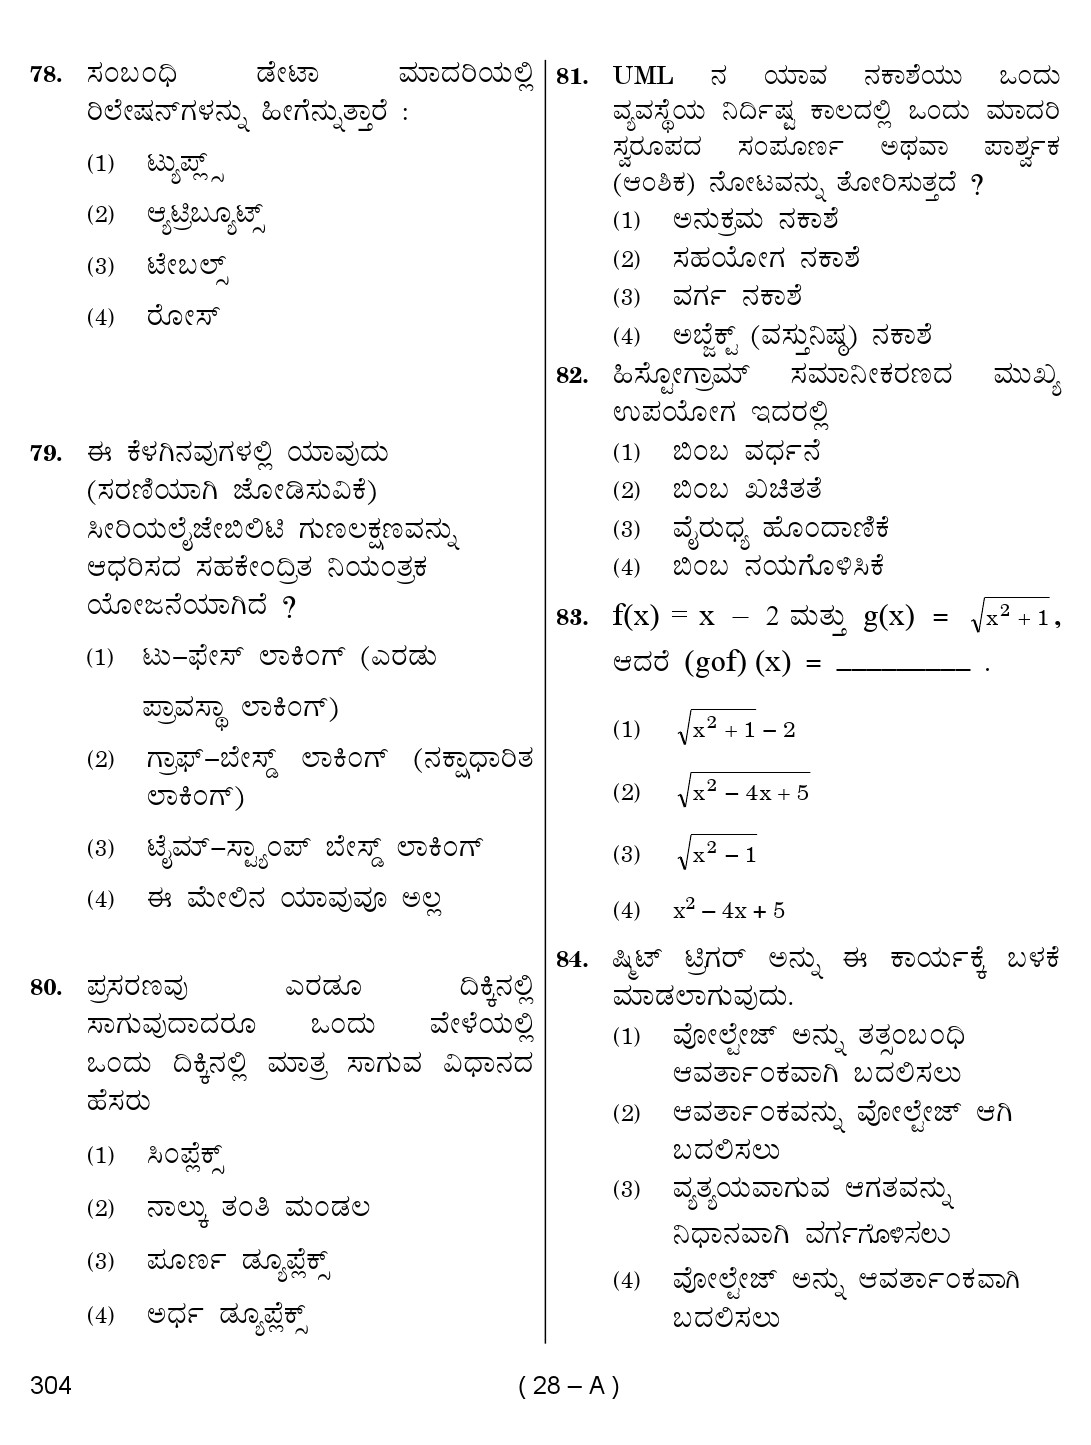 Karnataka PSC Computer Science Teachers Exam Sample Question Paper 2018 28